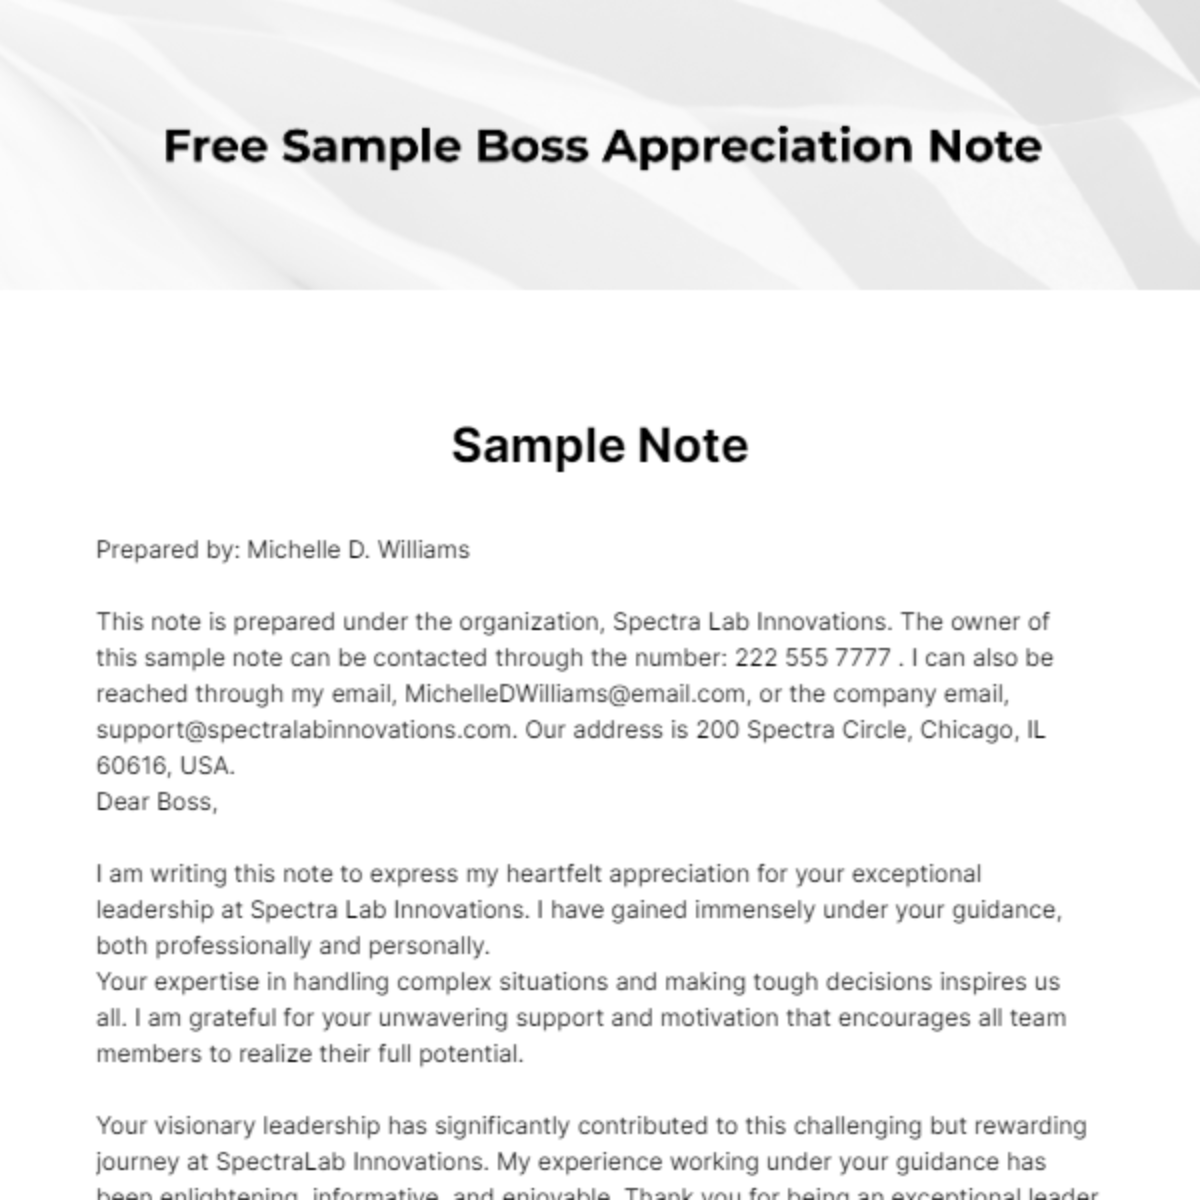 Sample Boss Appreciation Note Template